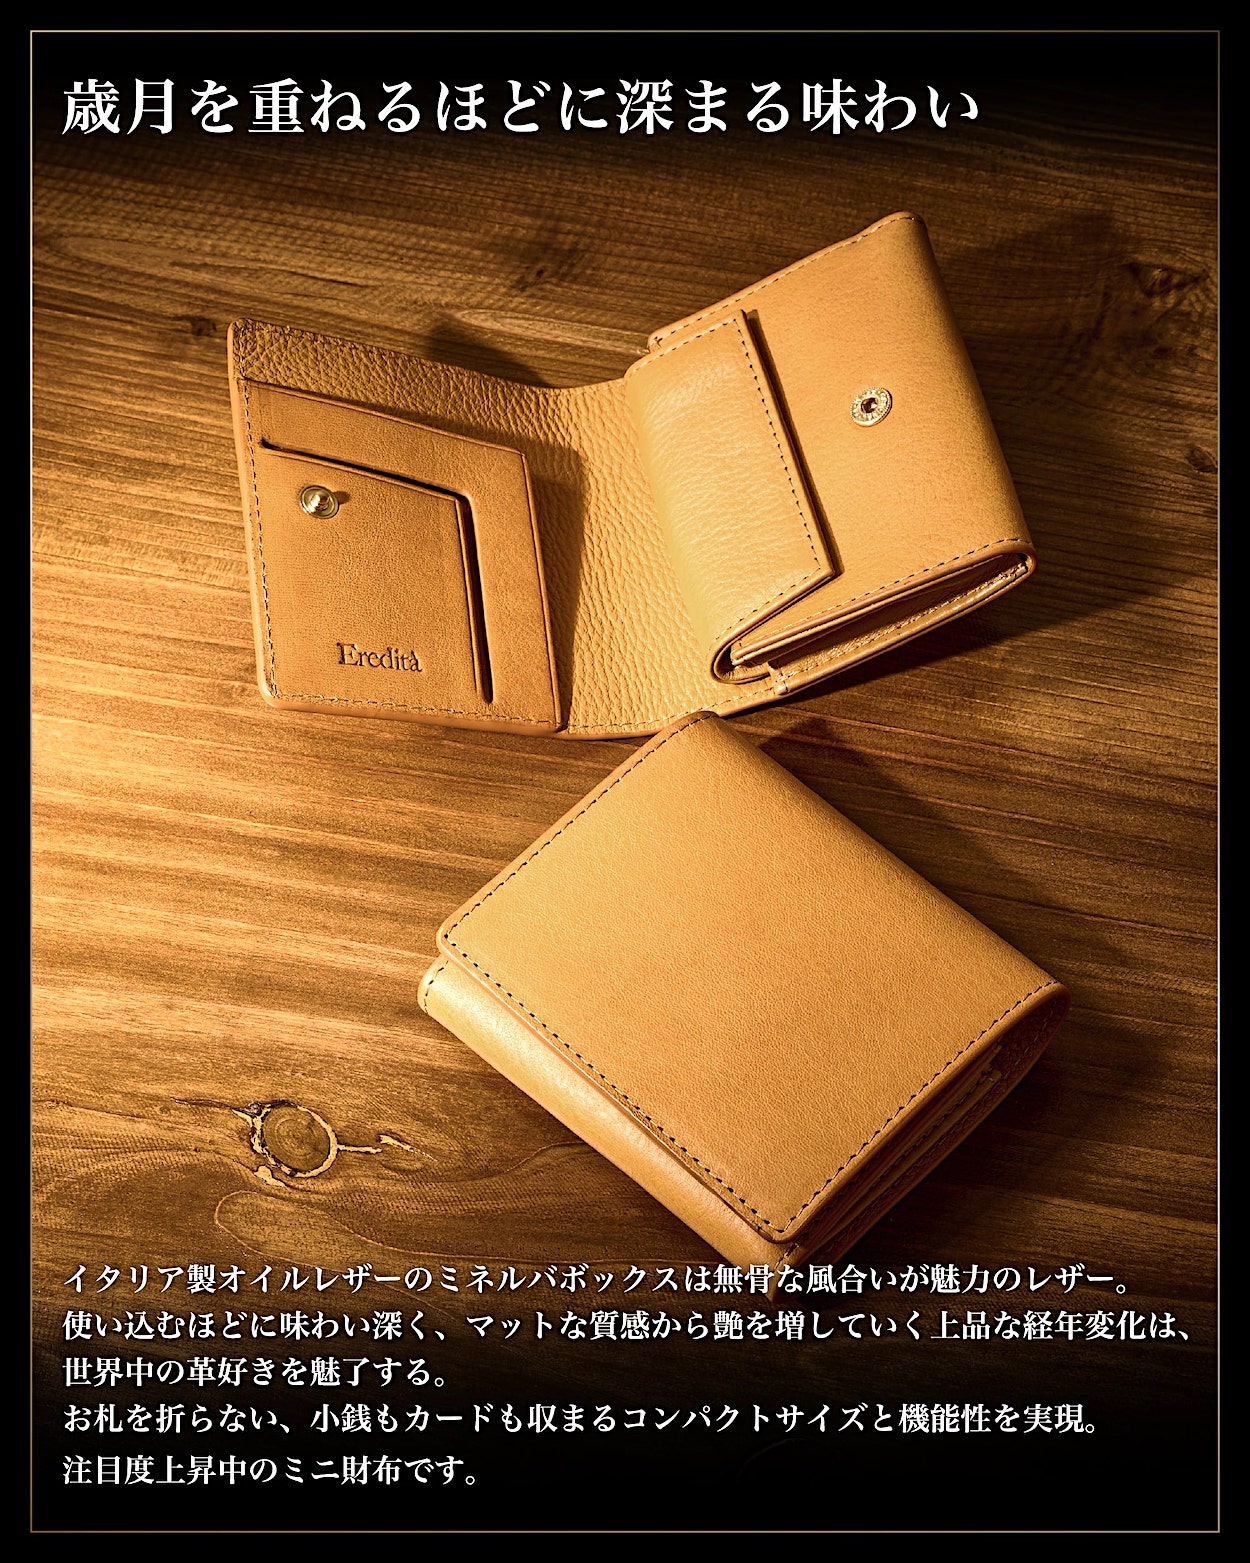 Eredita(エレディータ) ミネルバボックス コンパクト ミニ財布 メンズ 日本製 WL20